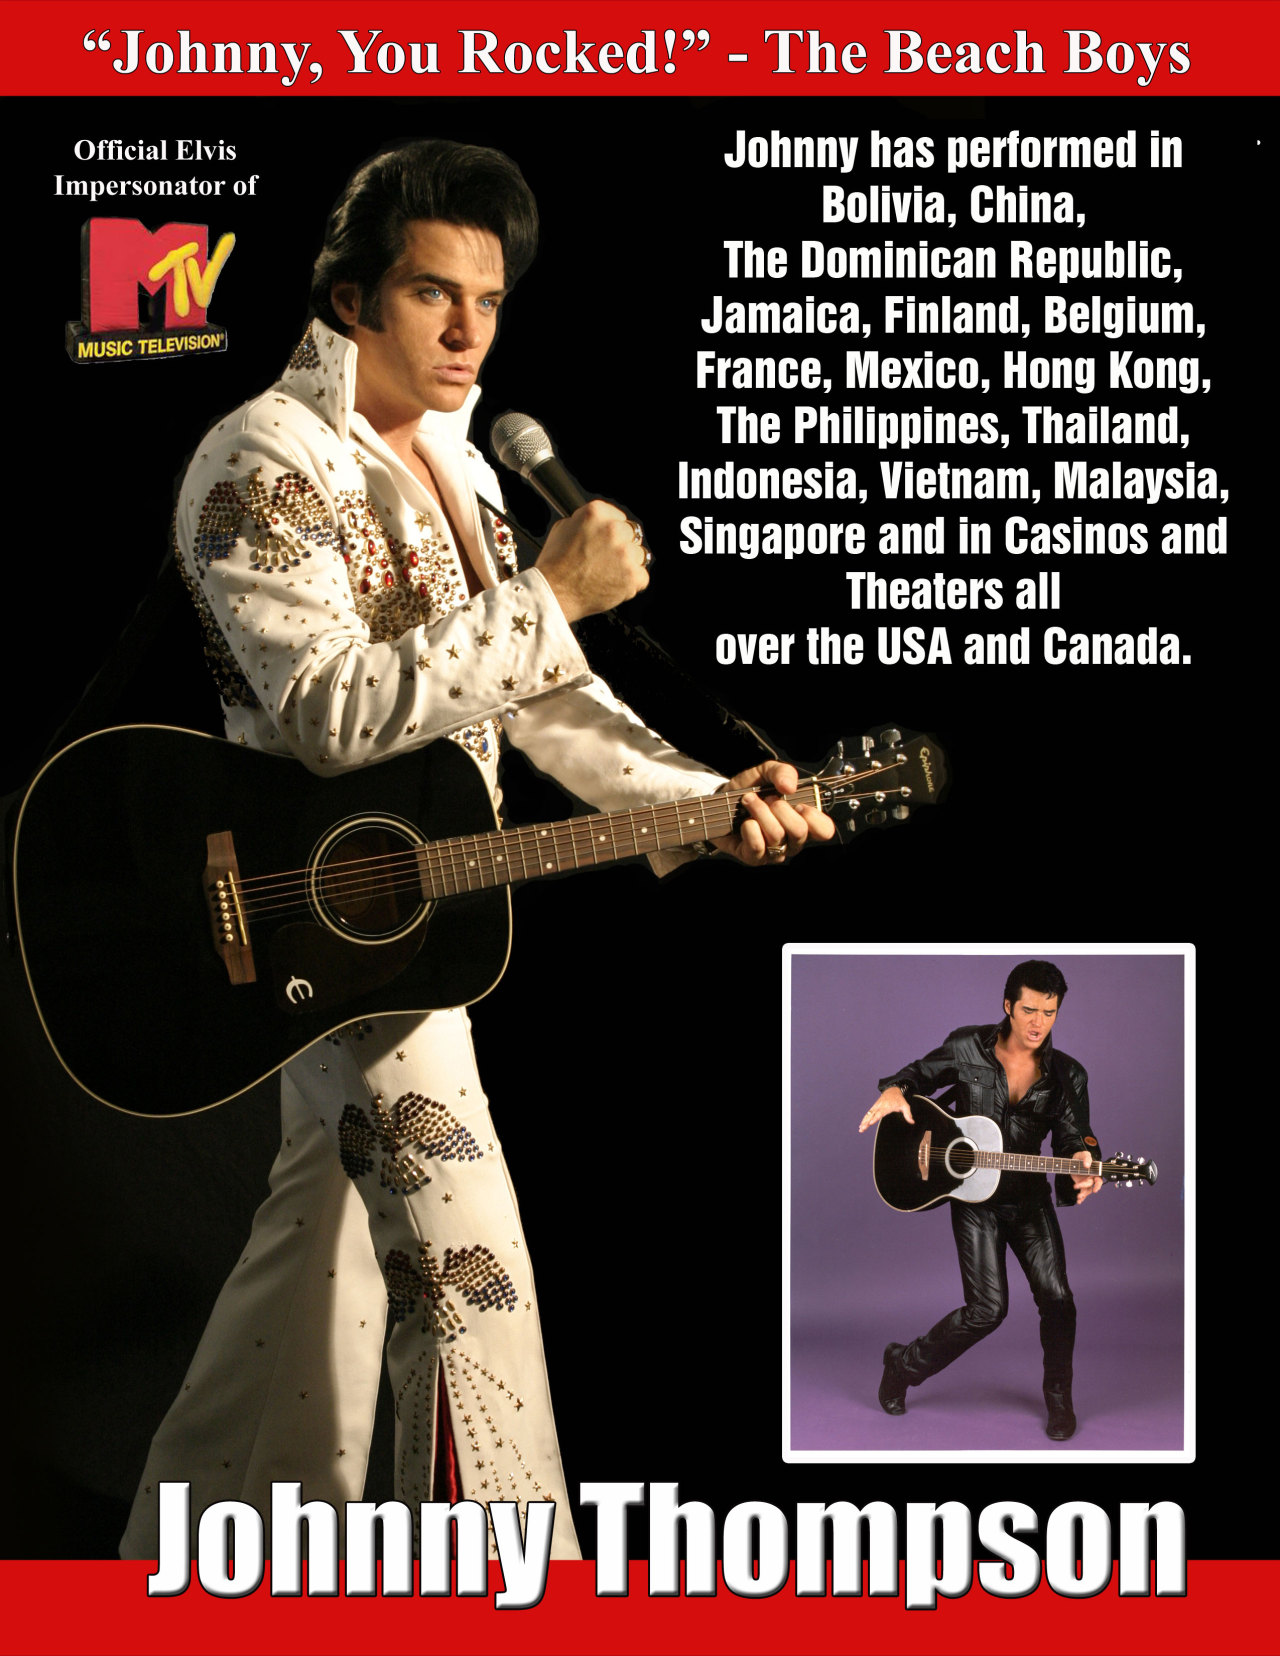 Daniel Aportas — Elvis Impersonator Johnny Thompson